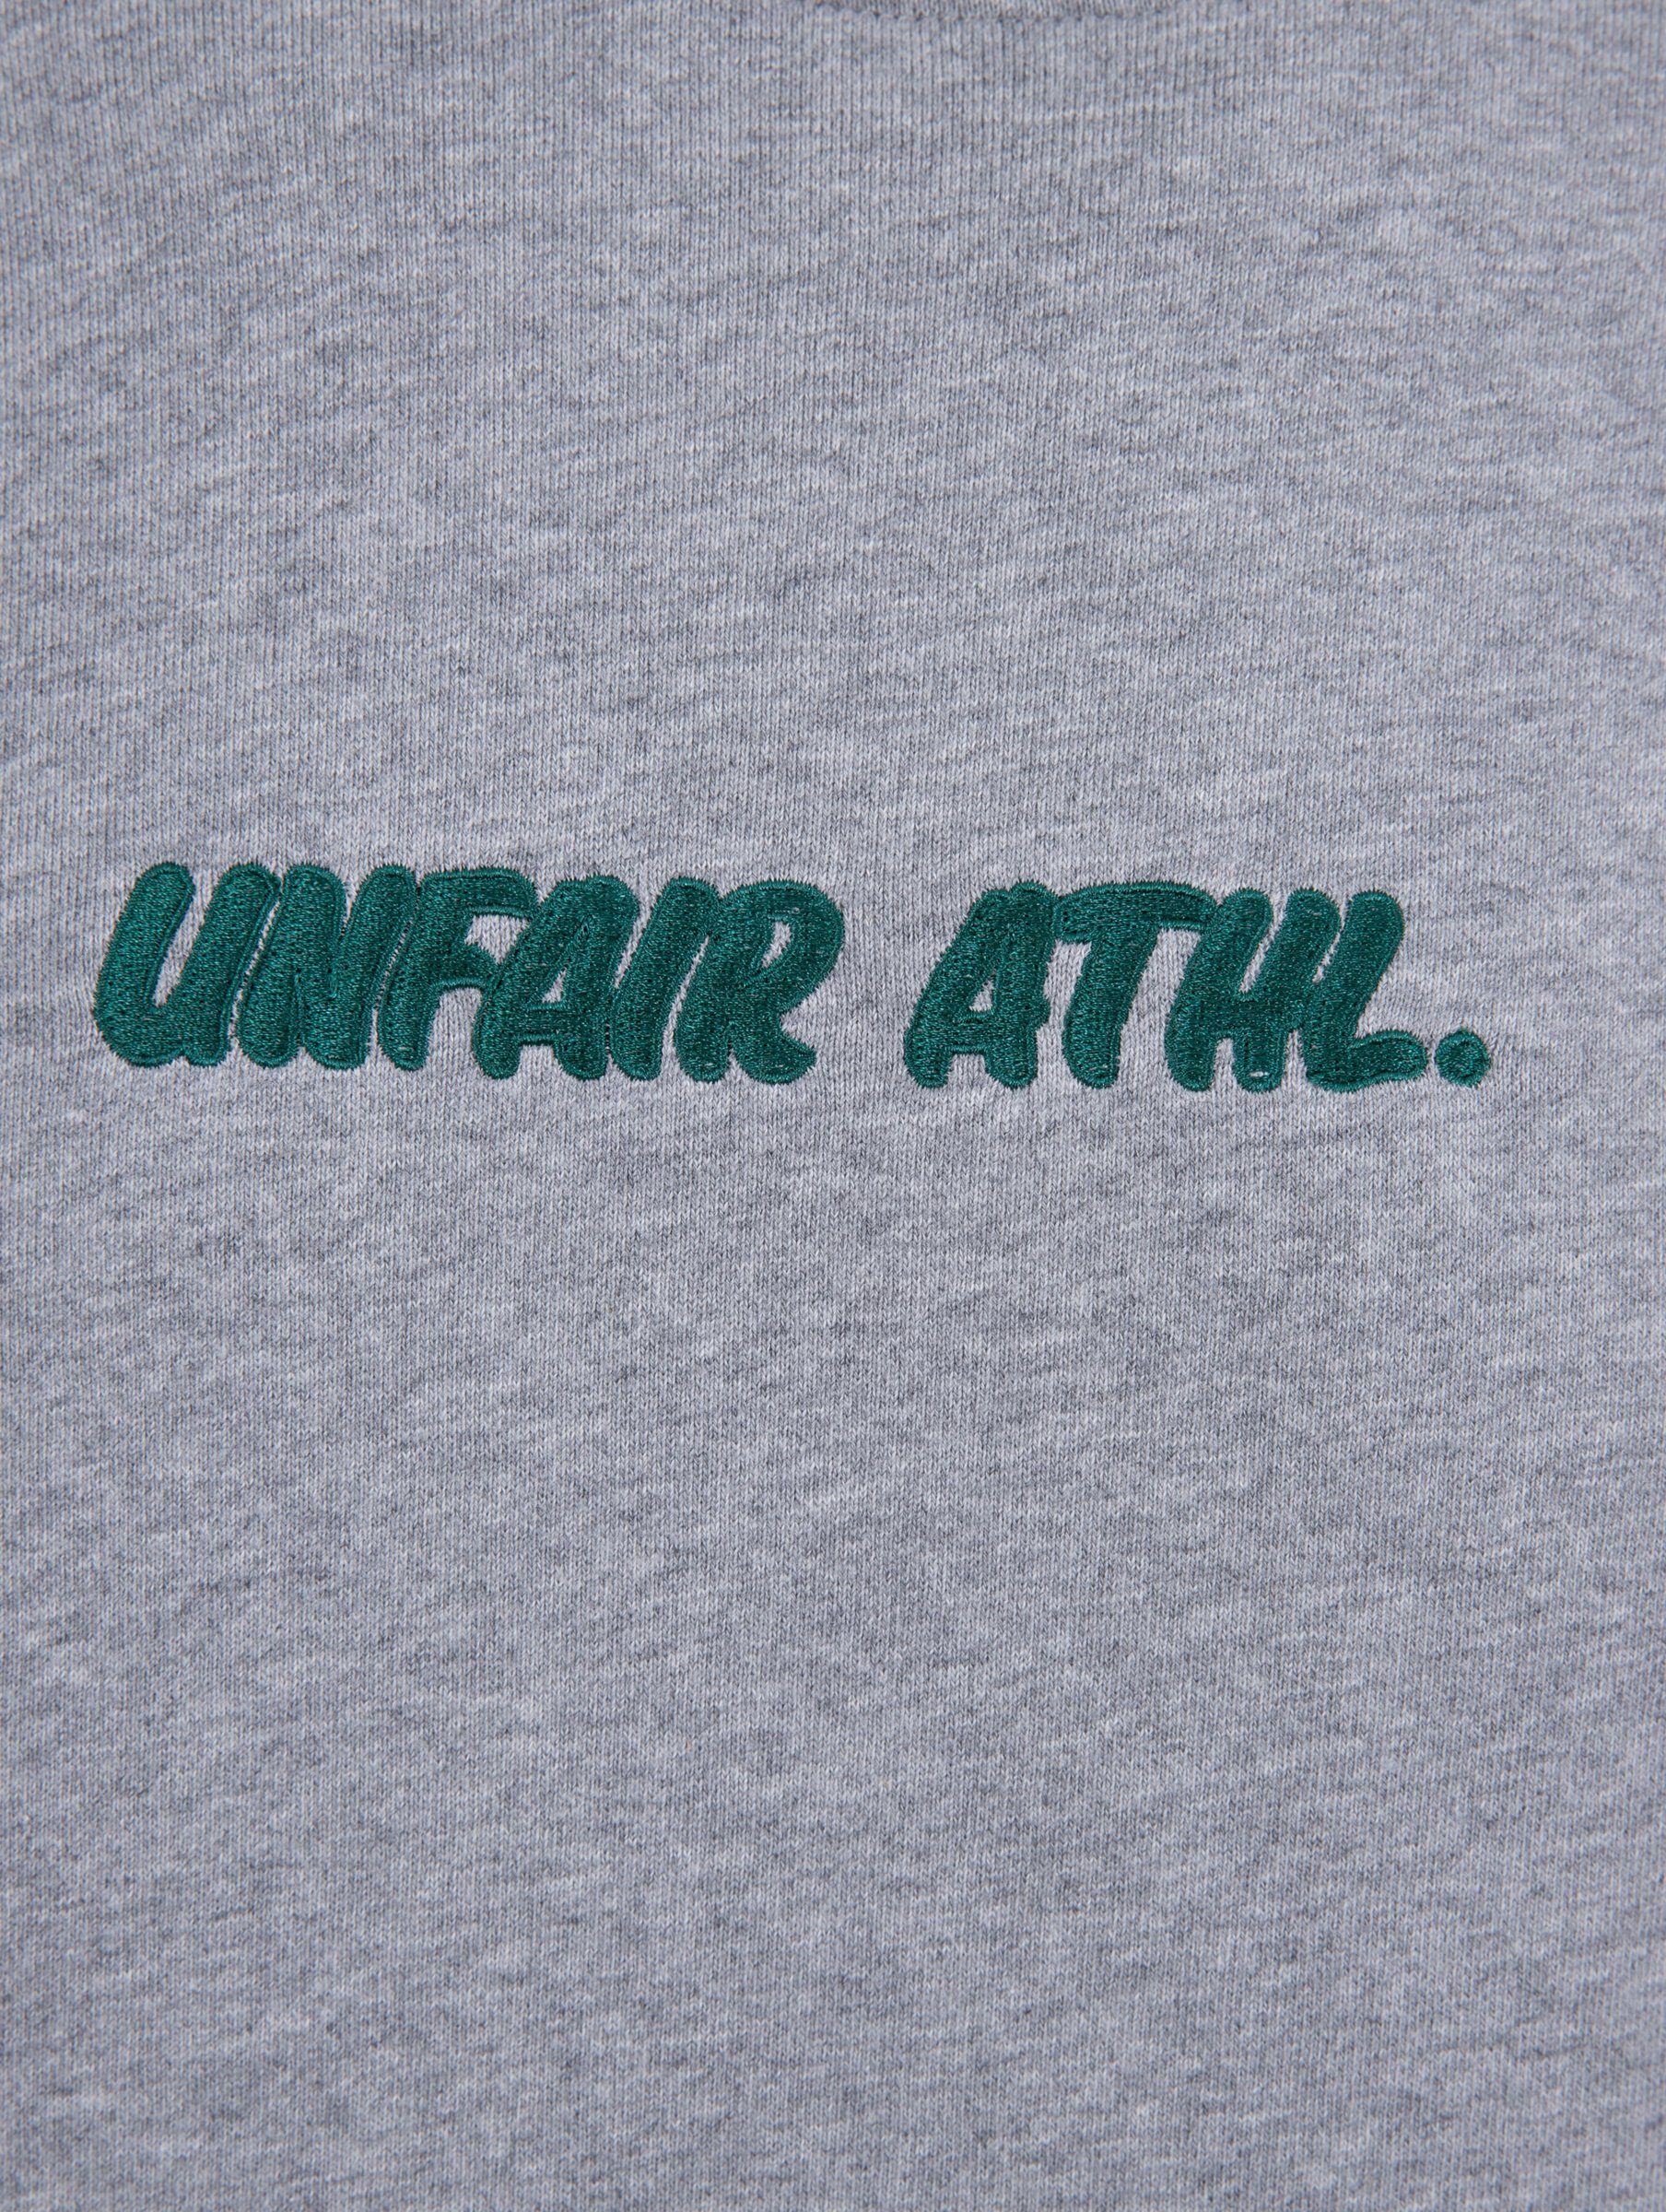 Herren Unfair Hoodie grün Laundry Unfair Athletics / Athletics grau Kapuzenpullover Service